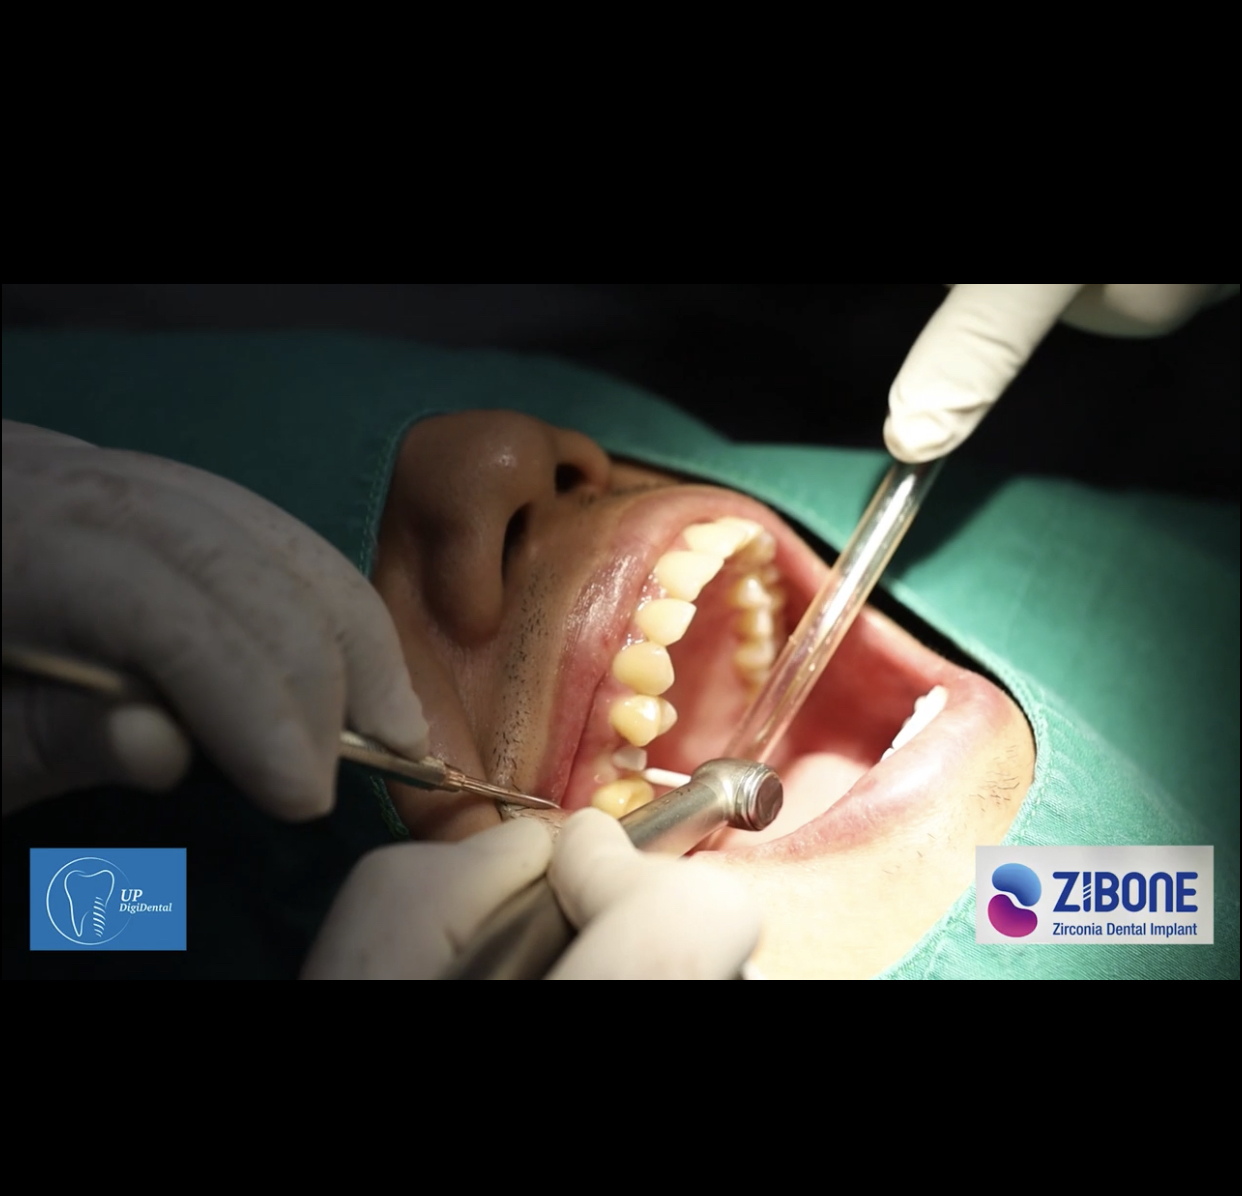 Zibone-Zirconia Dental Implant System -Thailand